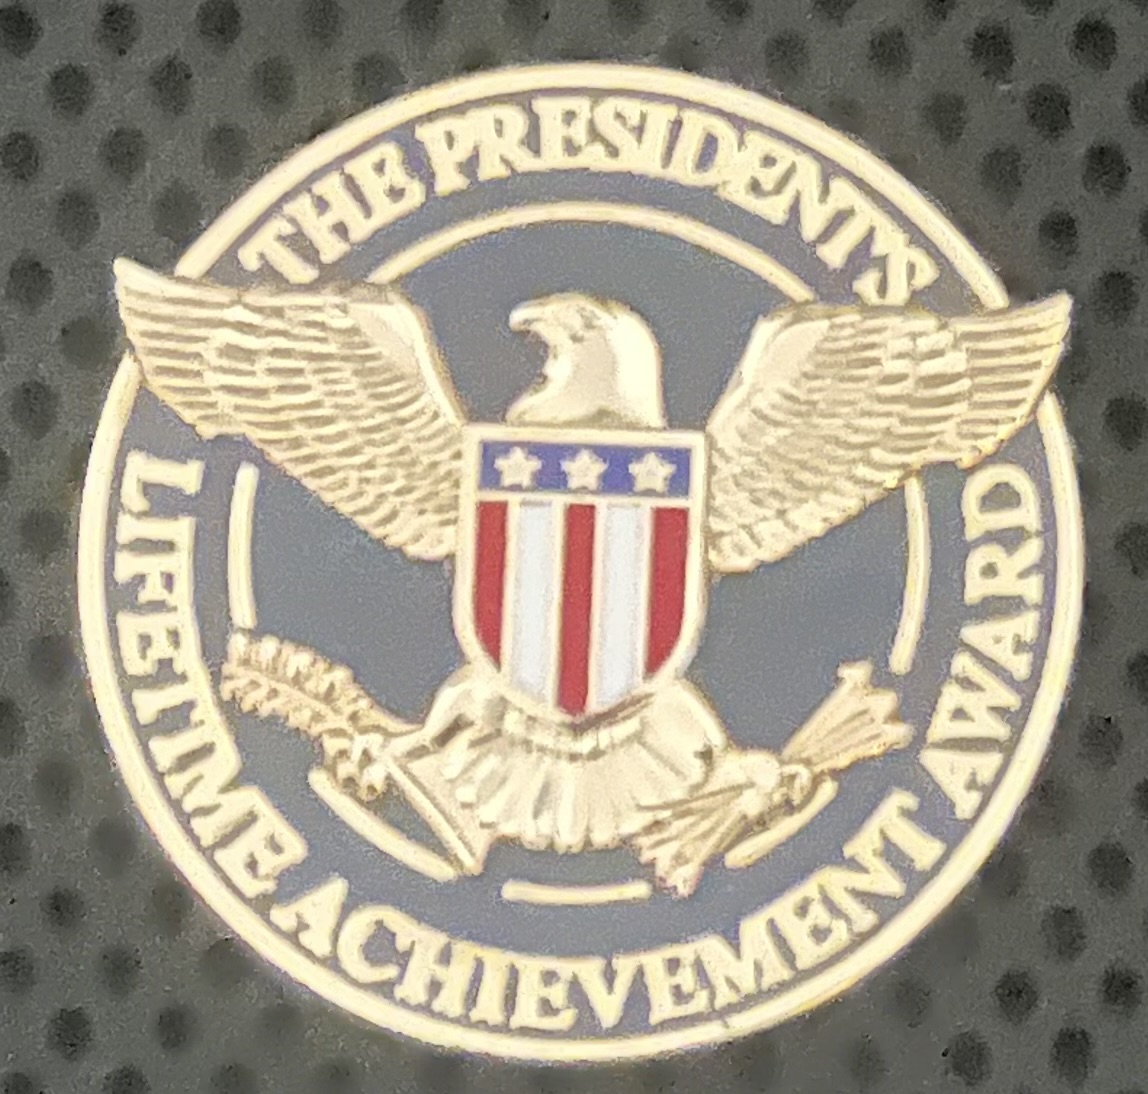 The President's Lifetime Achievement Award Coin